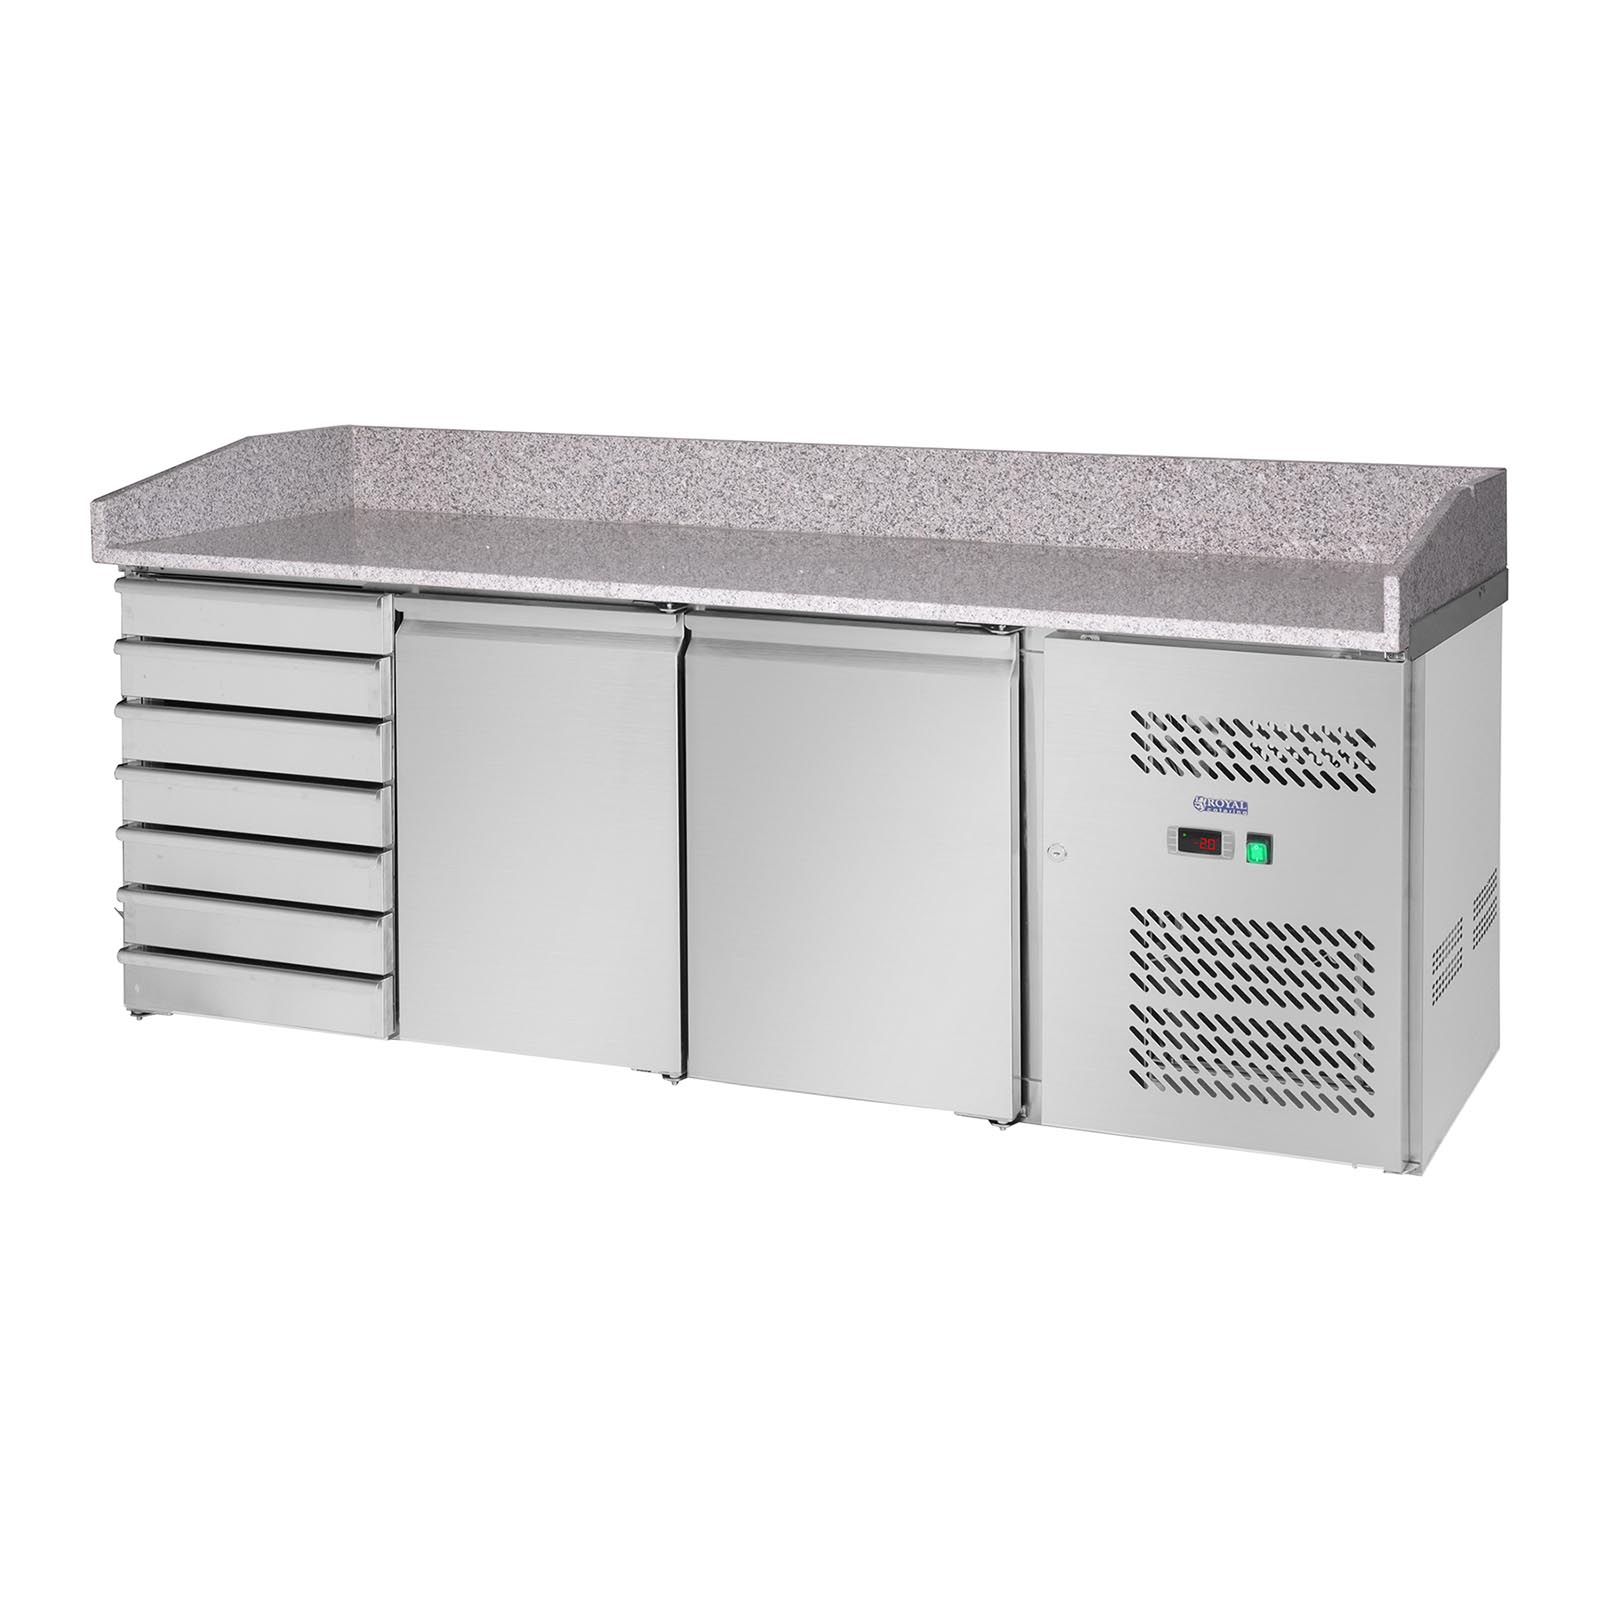 Kühltisch - 580 L - Granitarbeitsplatte - 2 Türen